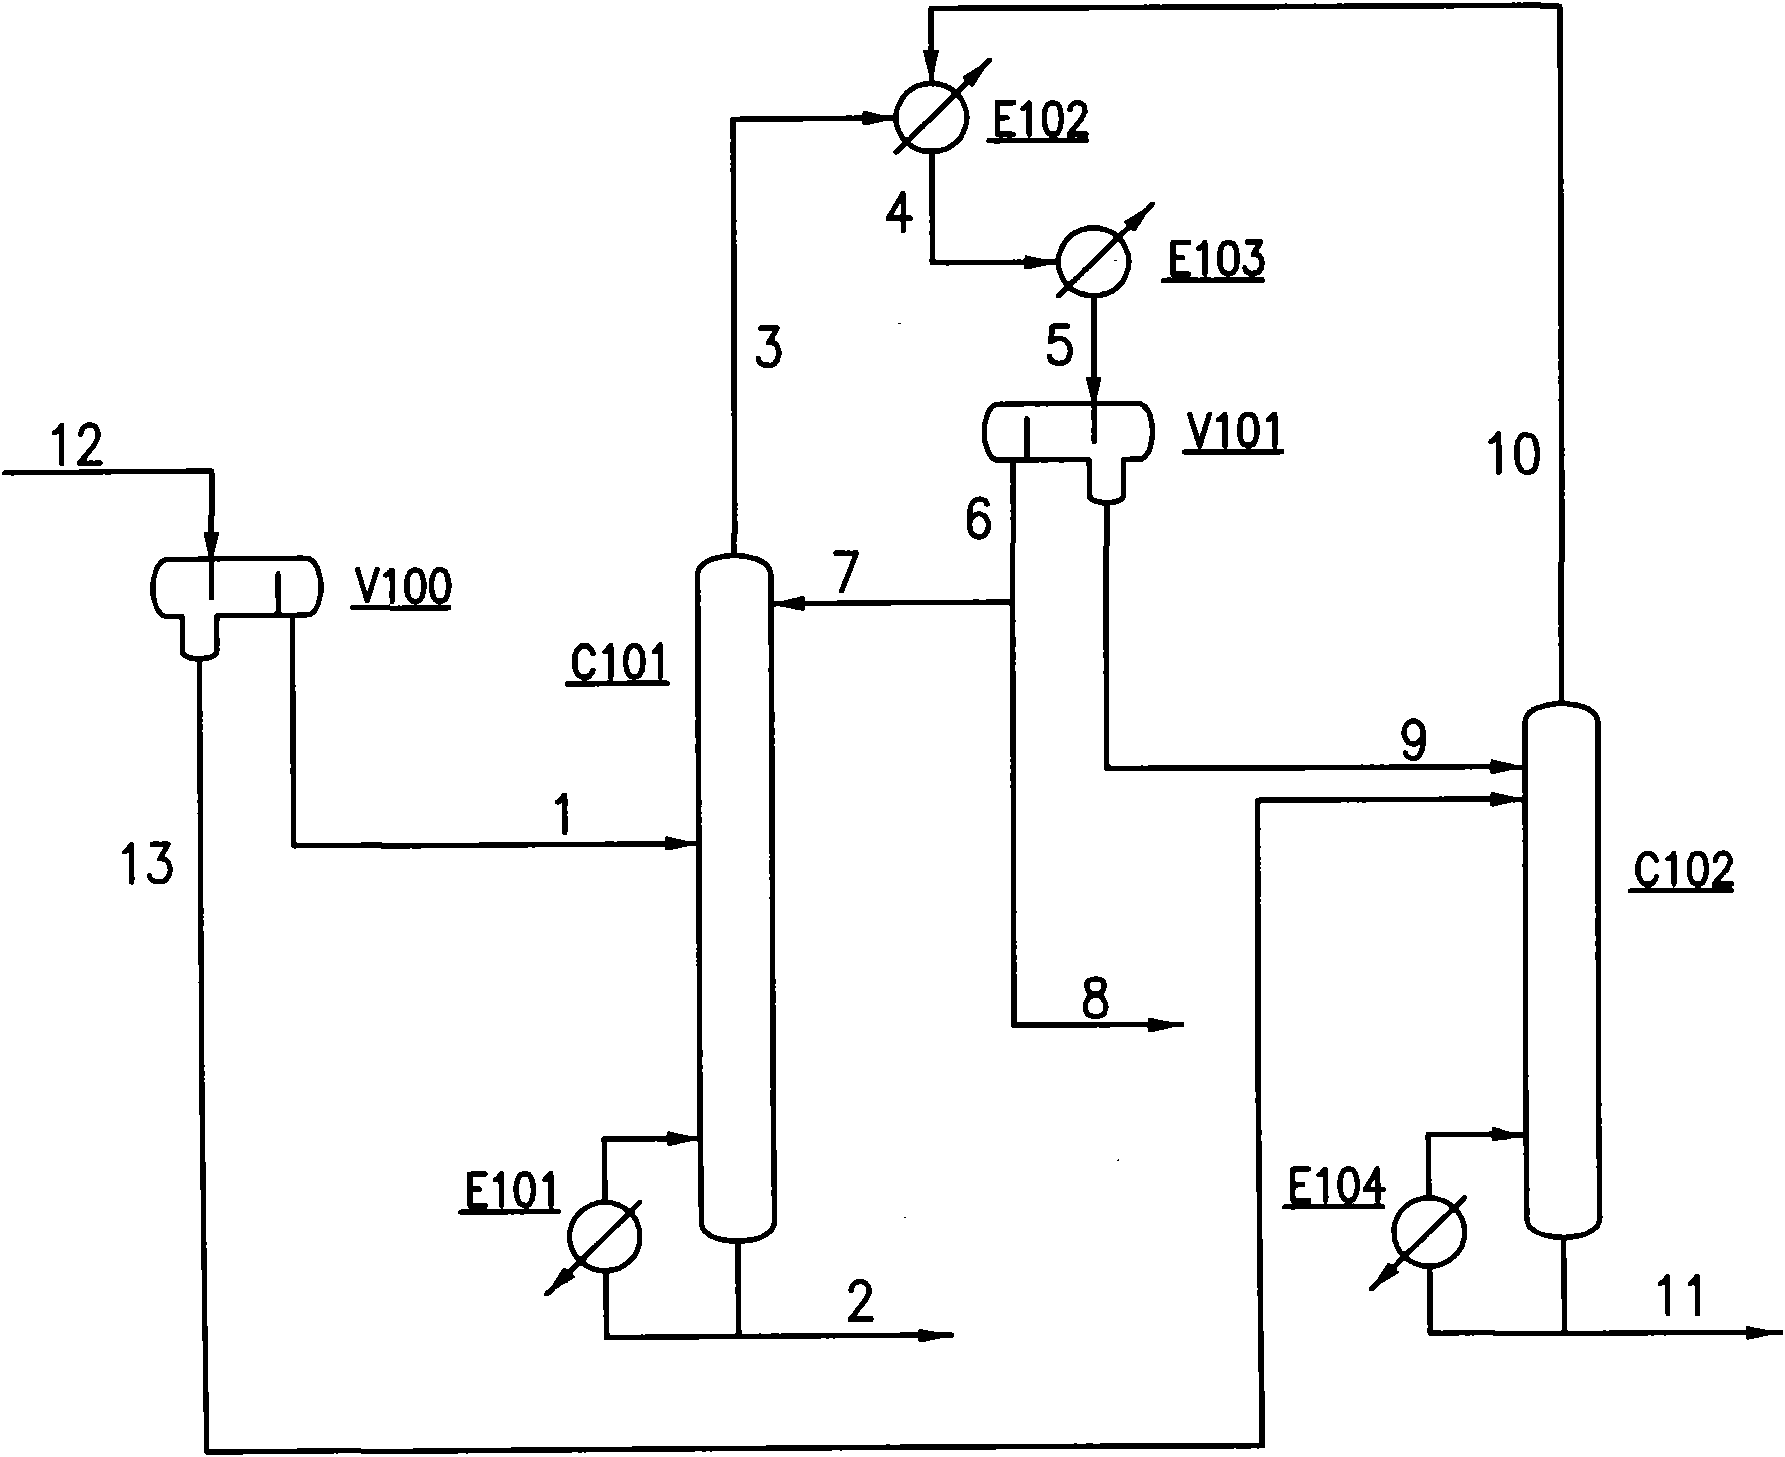 Purification method of ethyl acetate